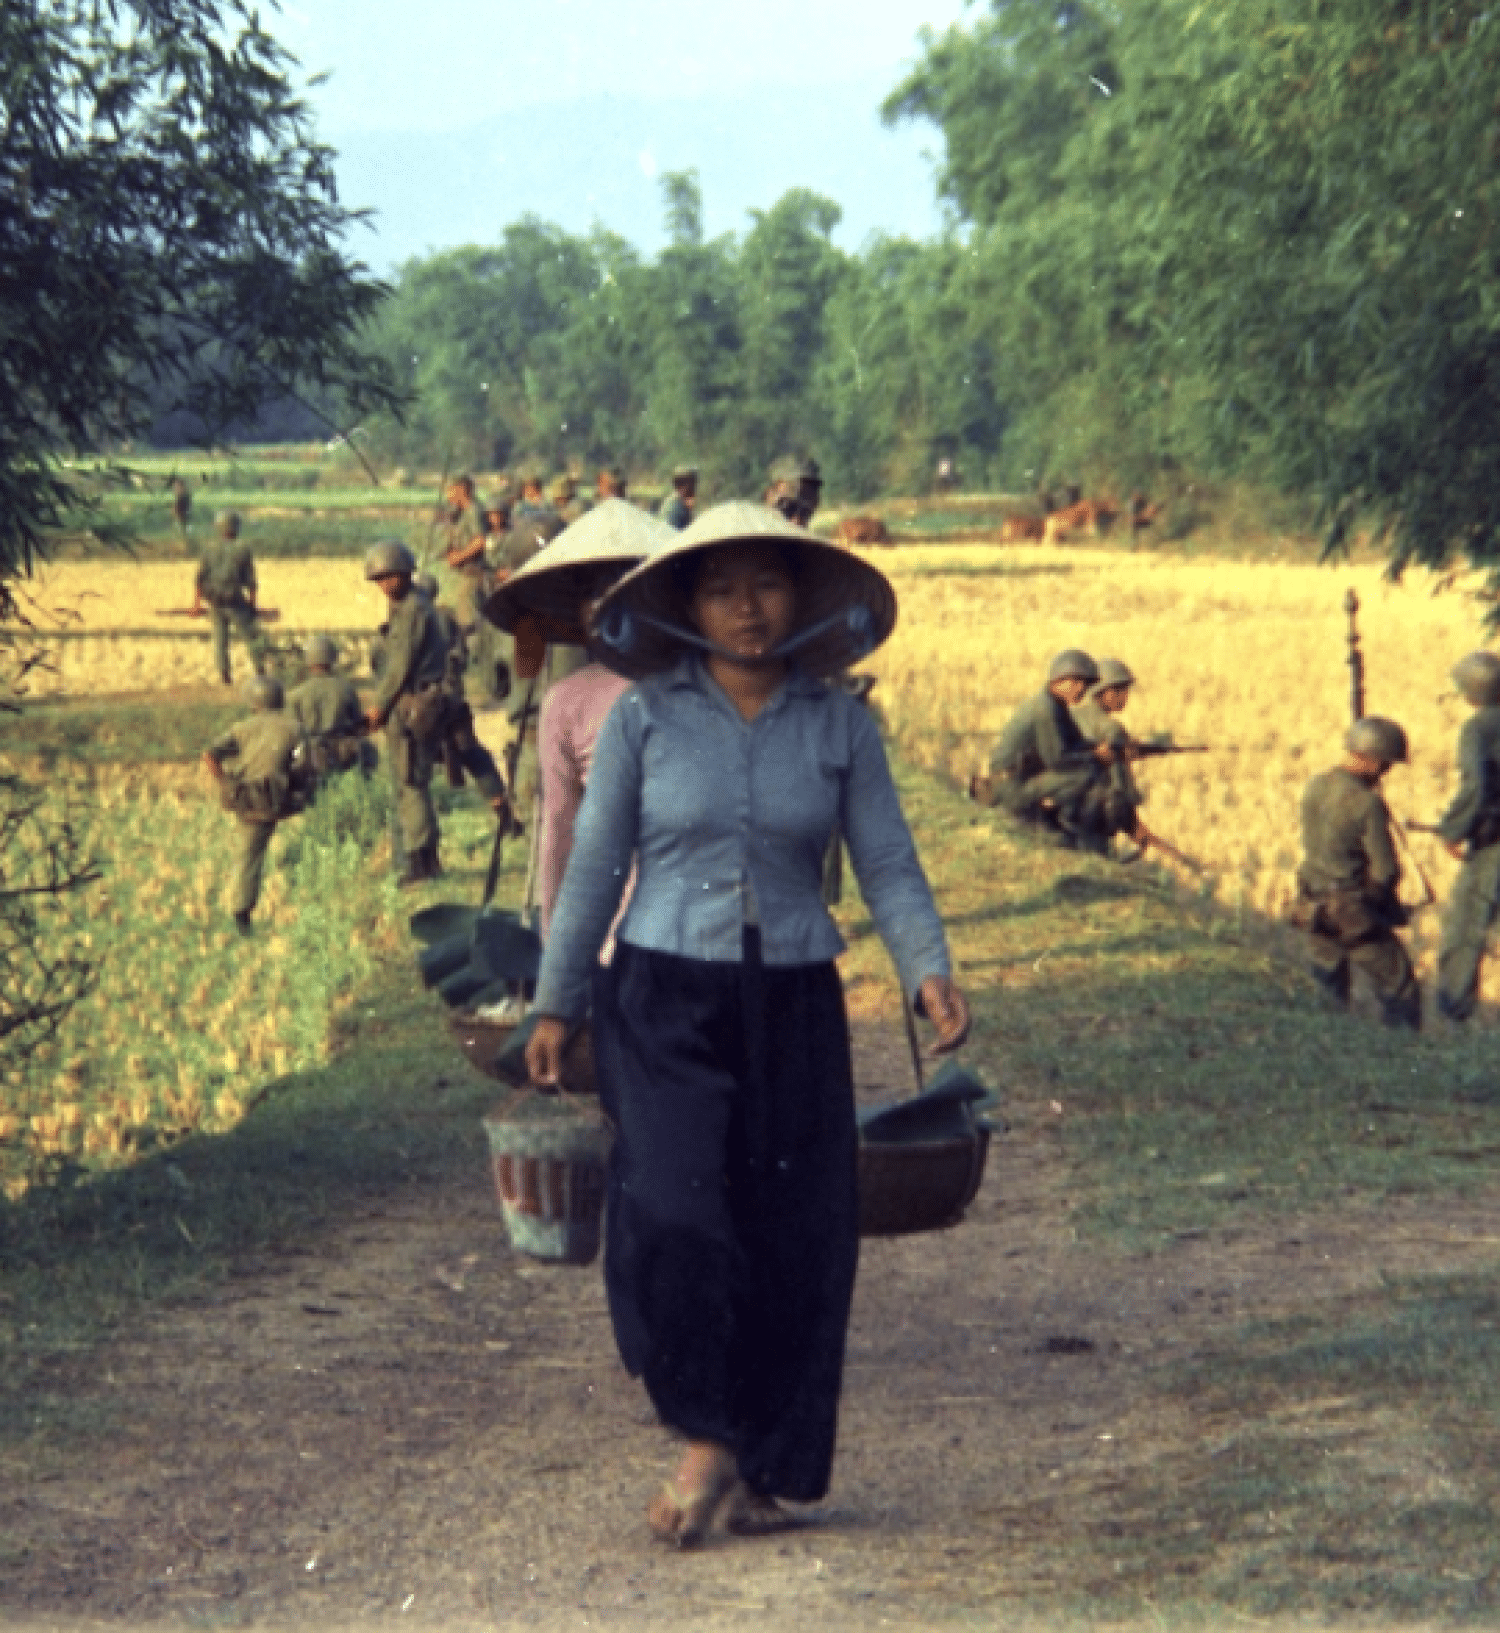 The Vietnam War: Origins, History, and Legacies